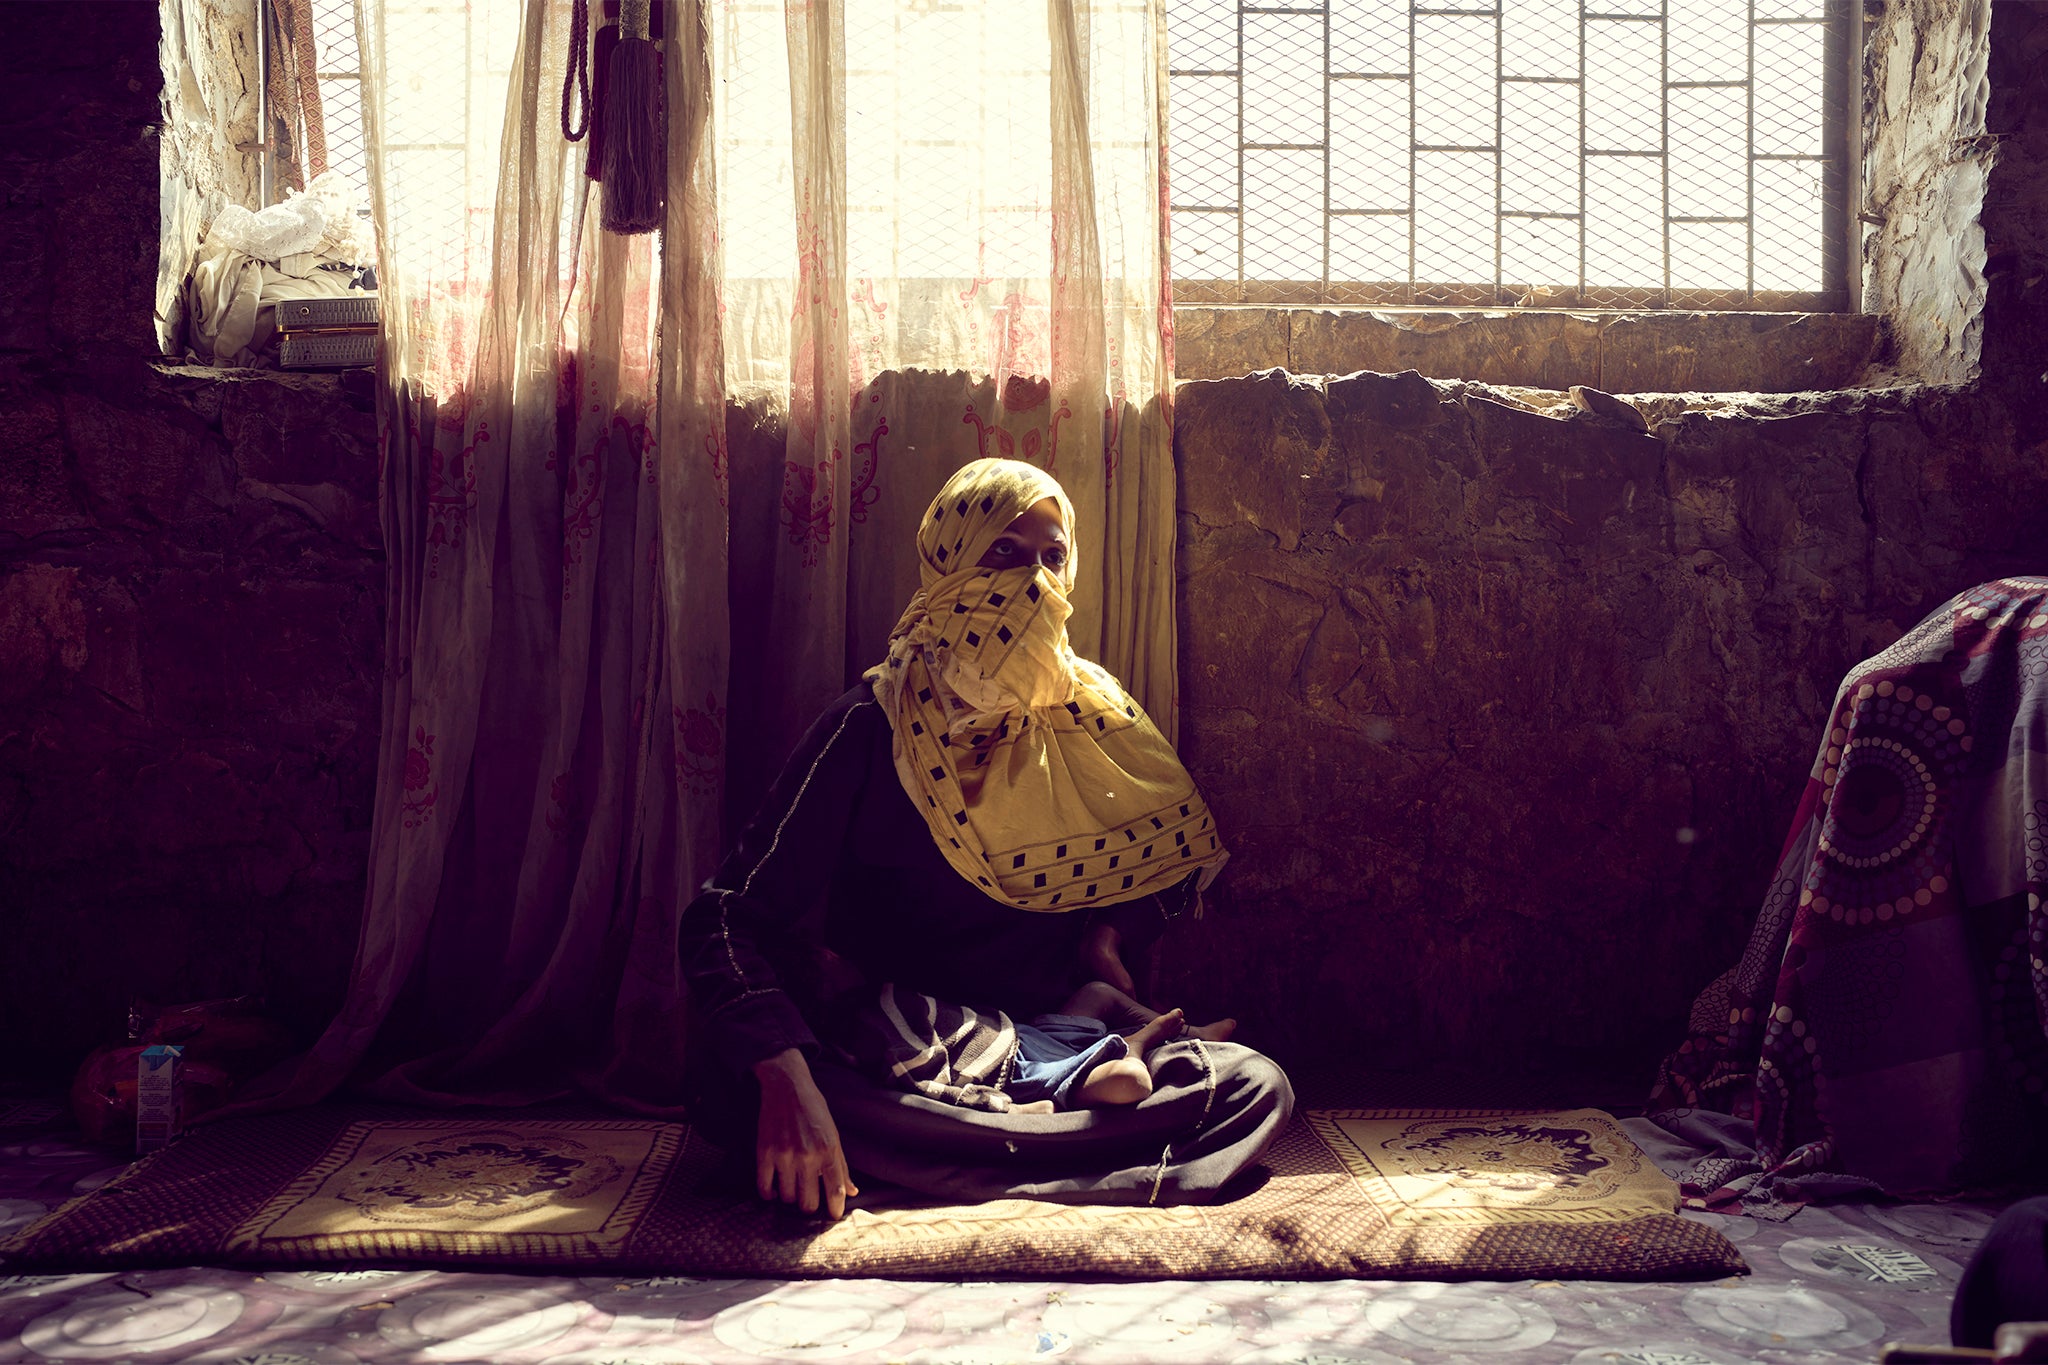 Eshraq, who lost her daughter Elham to malnutrition when she was just eight months old at the Ammar Bin Yasser site